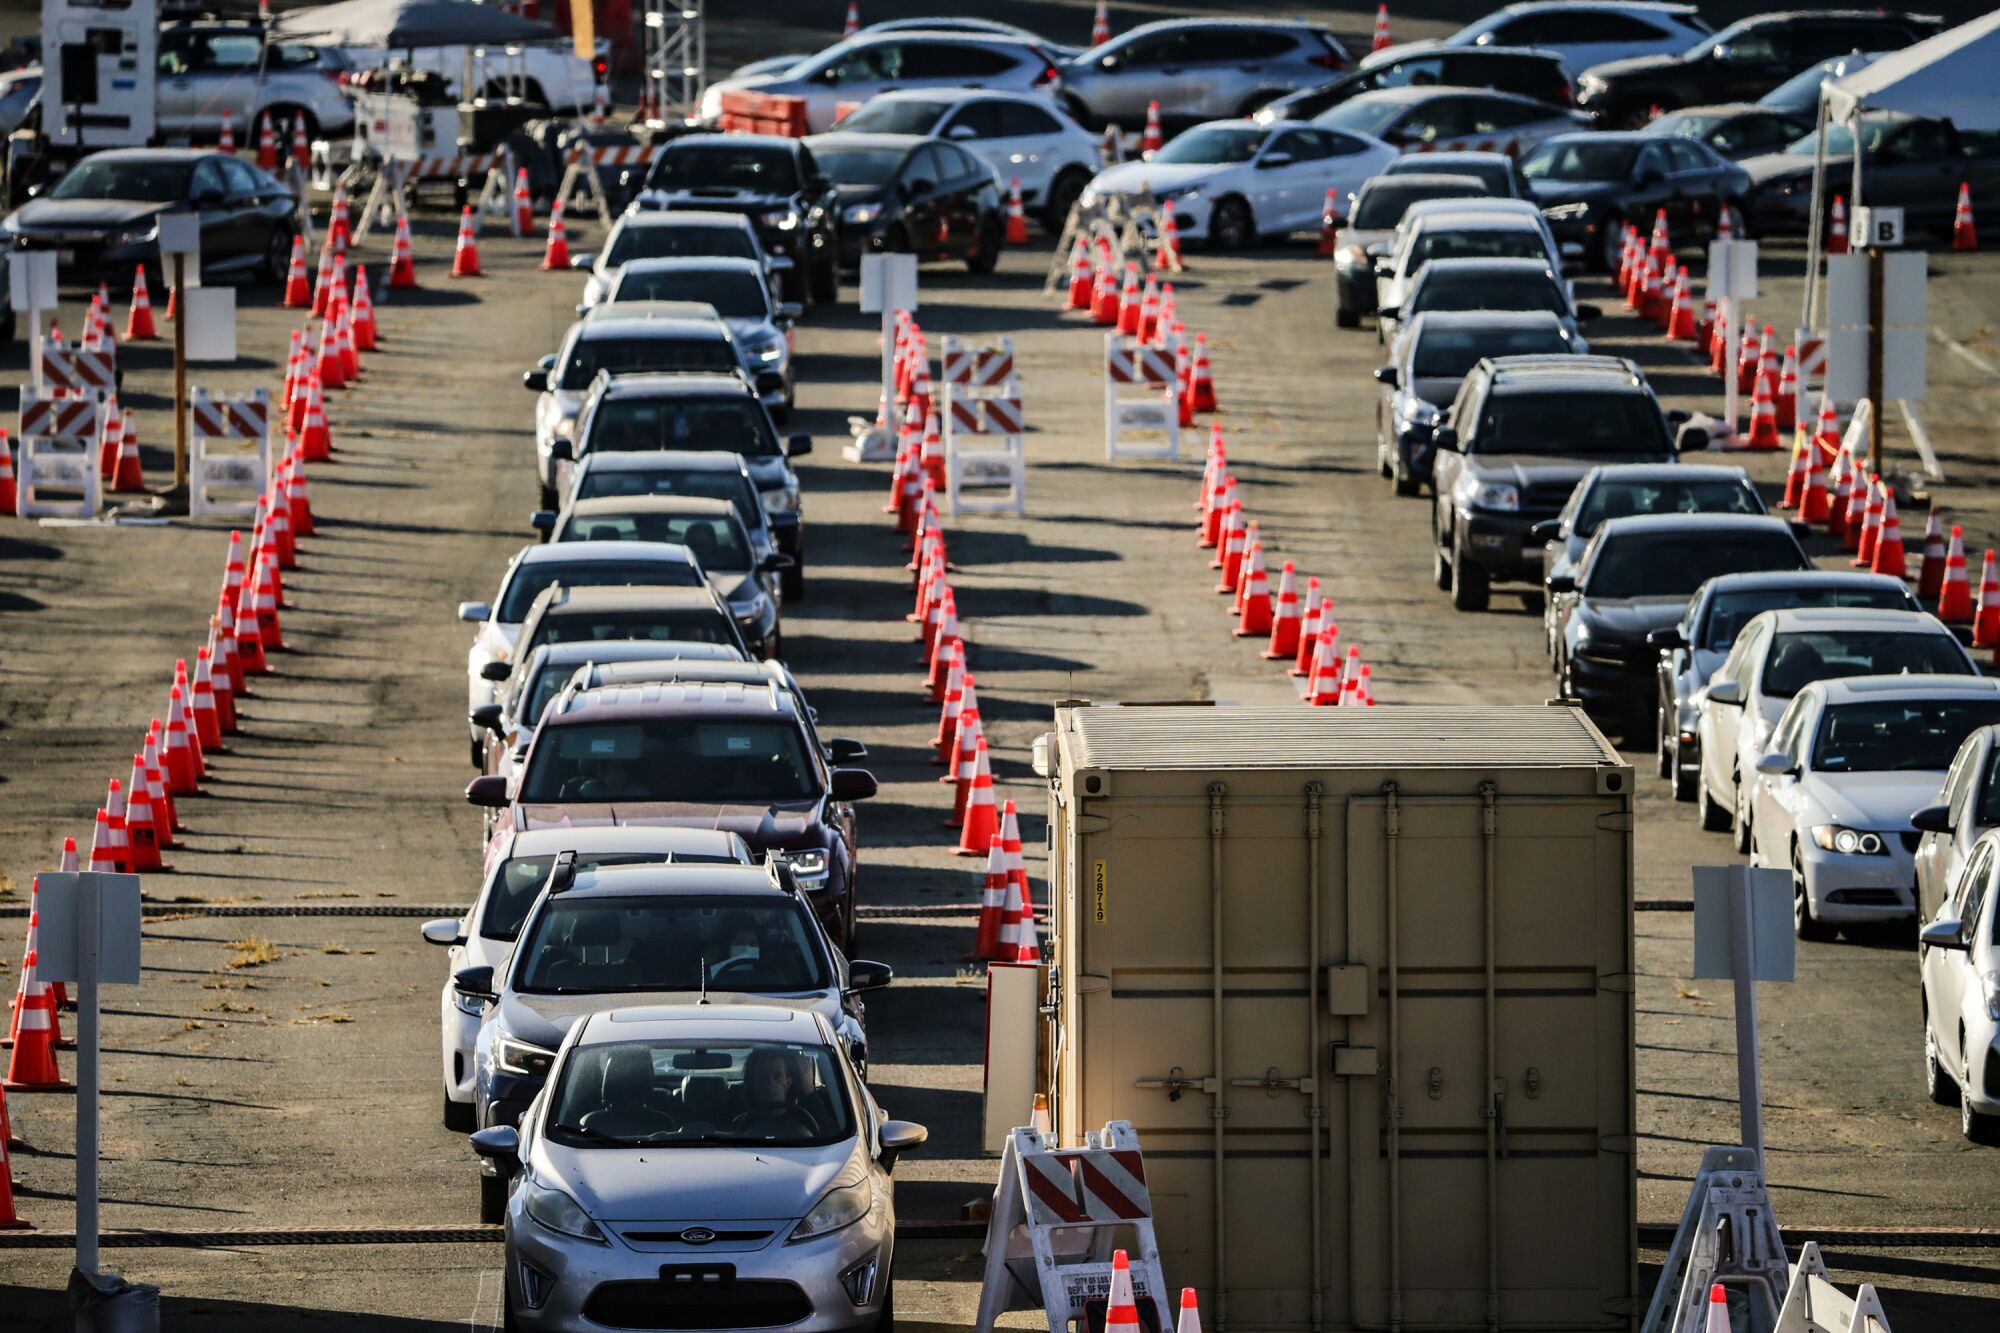 Waiting cars stack up in lines between orange traffic cones in Dodger Stadium's parking lot.